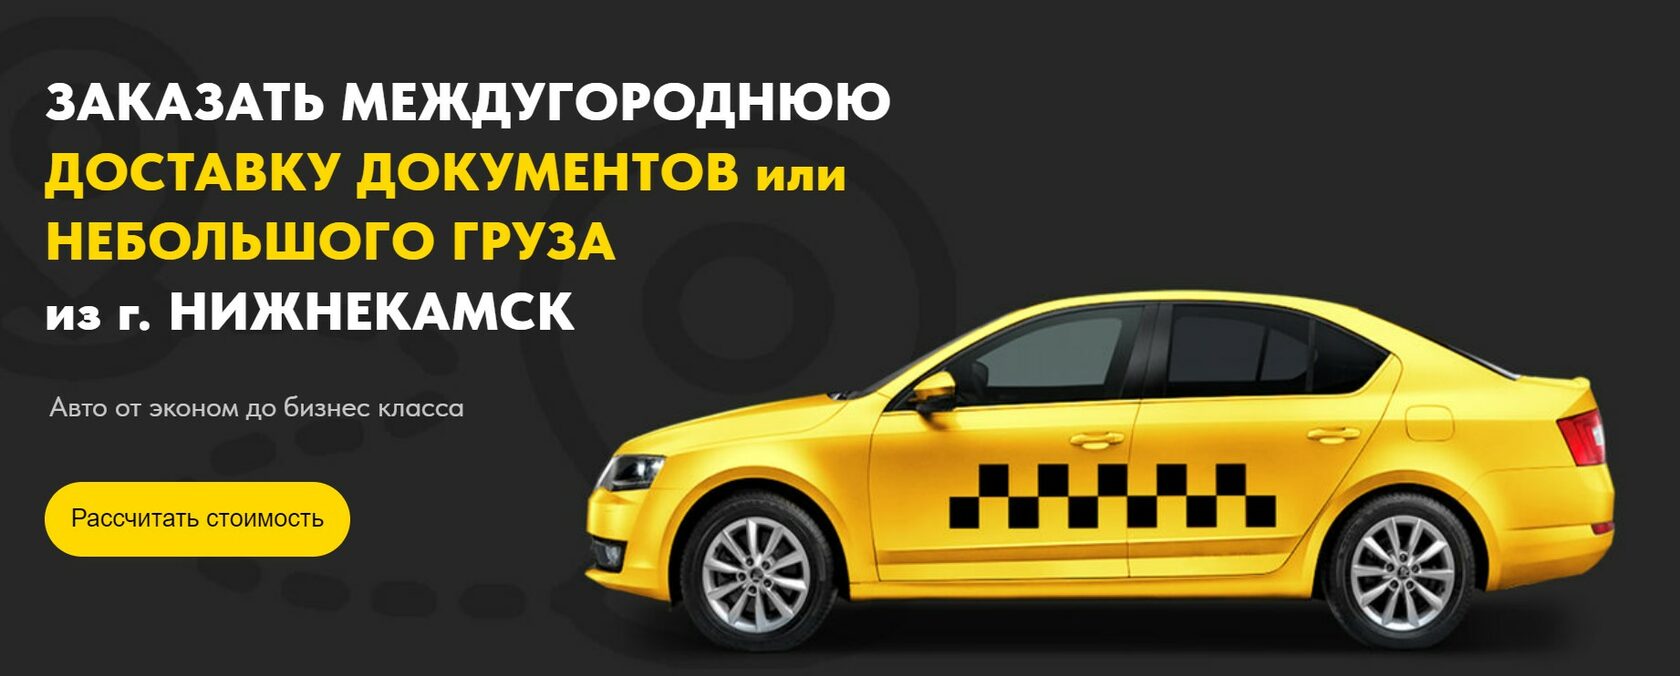 Такси Волжский. Такси эконом. Реклама такси межгород. Расценки такси межгород за километр.